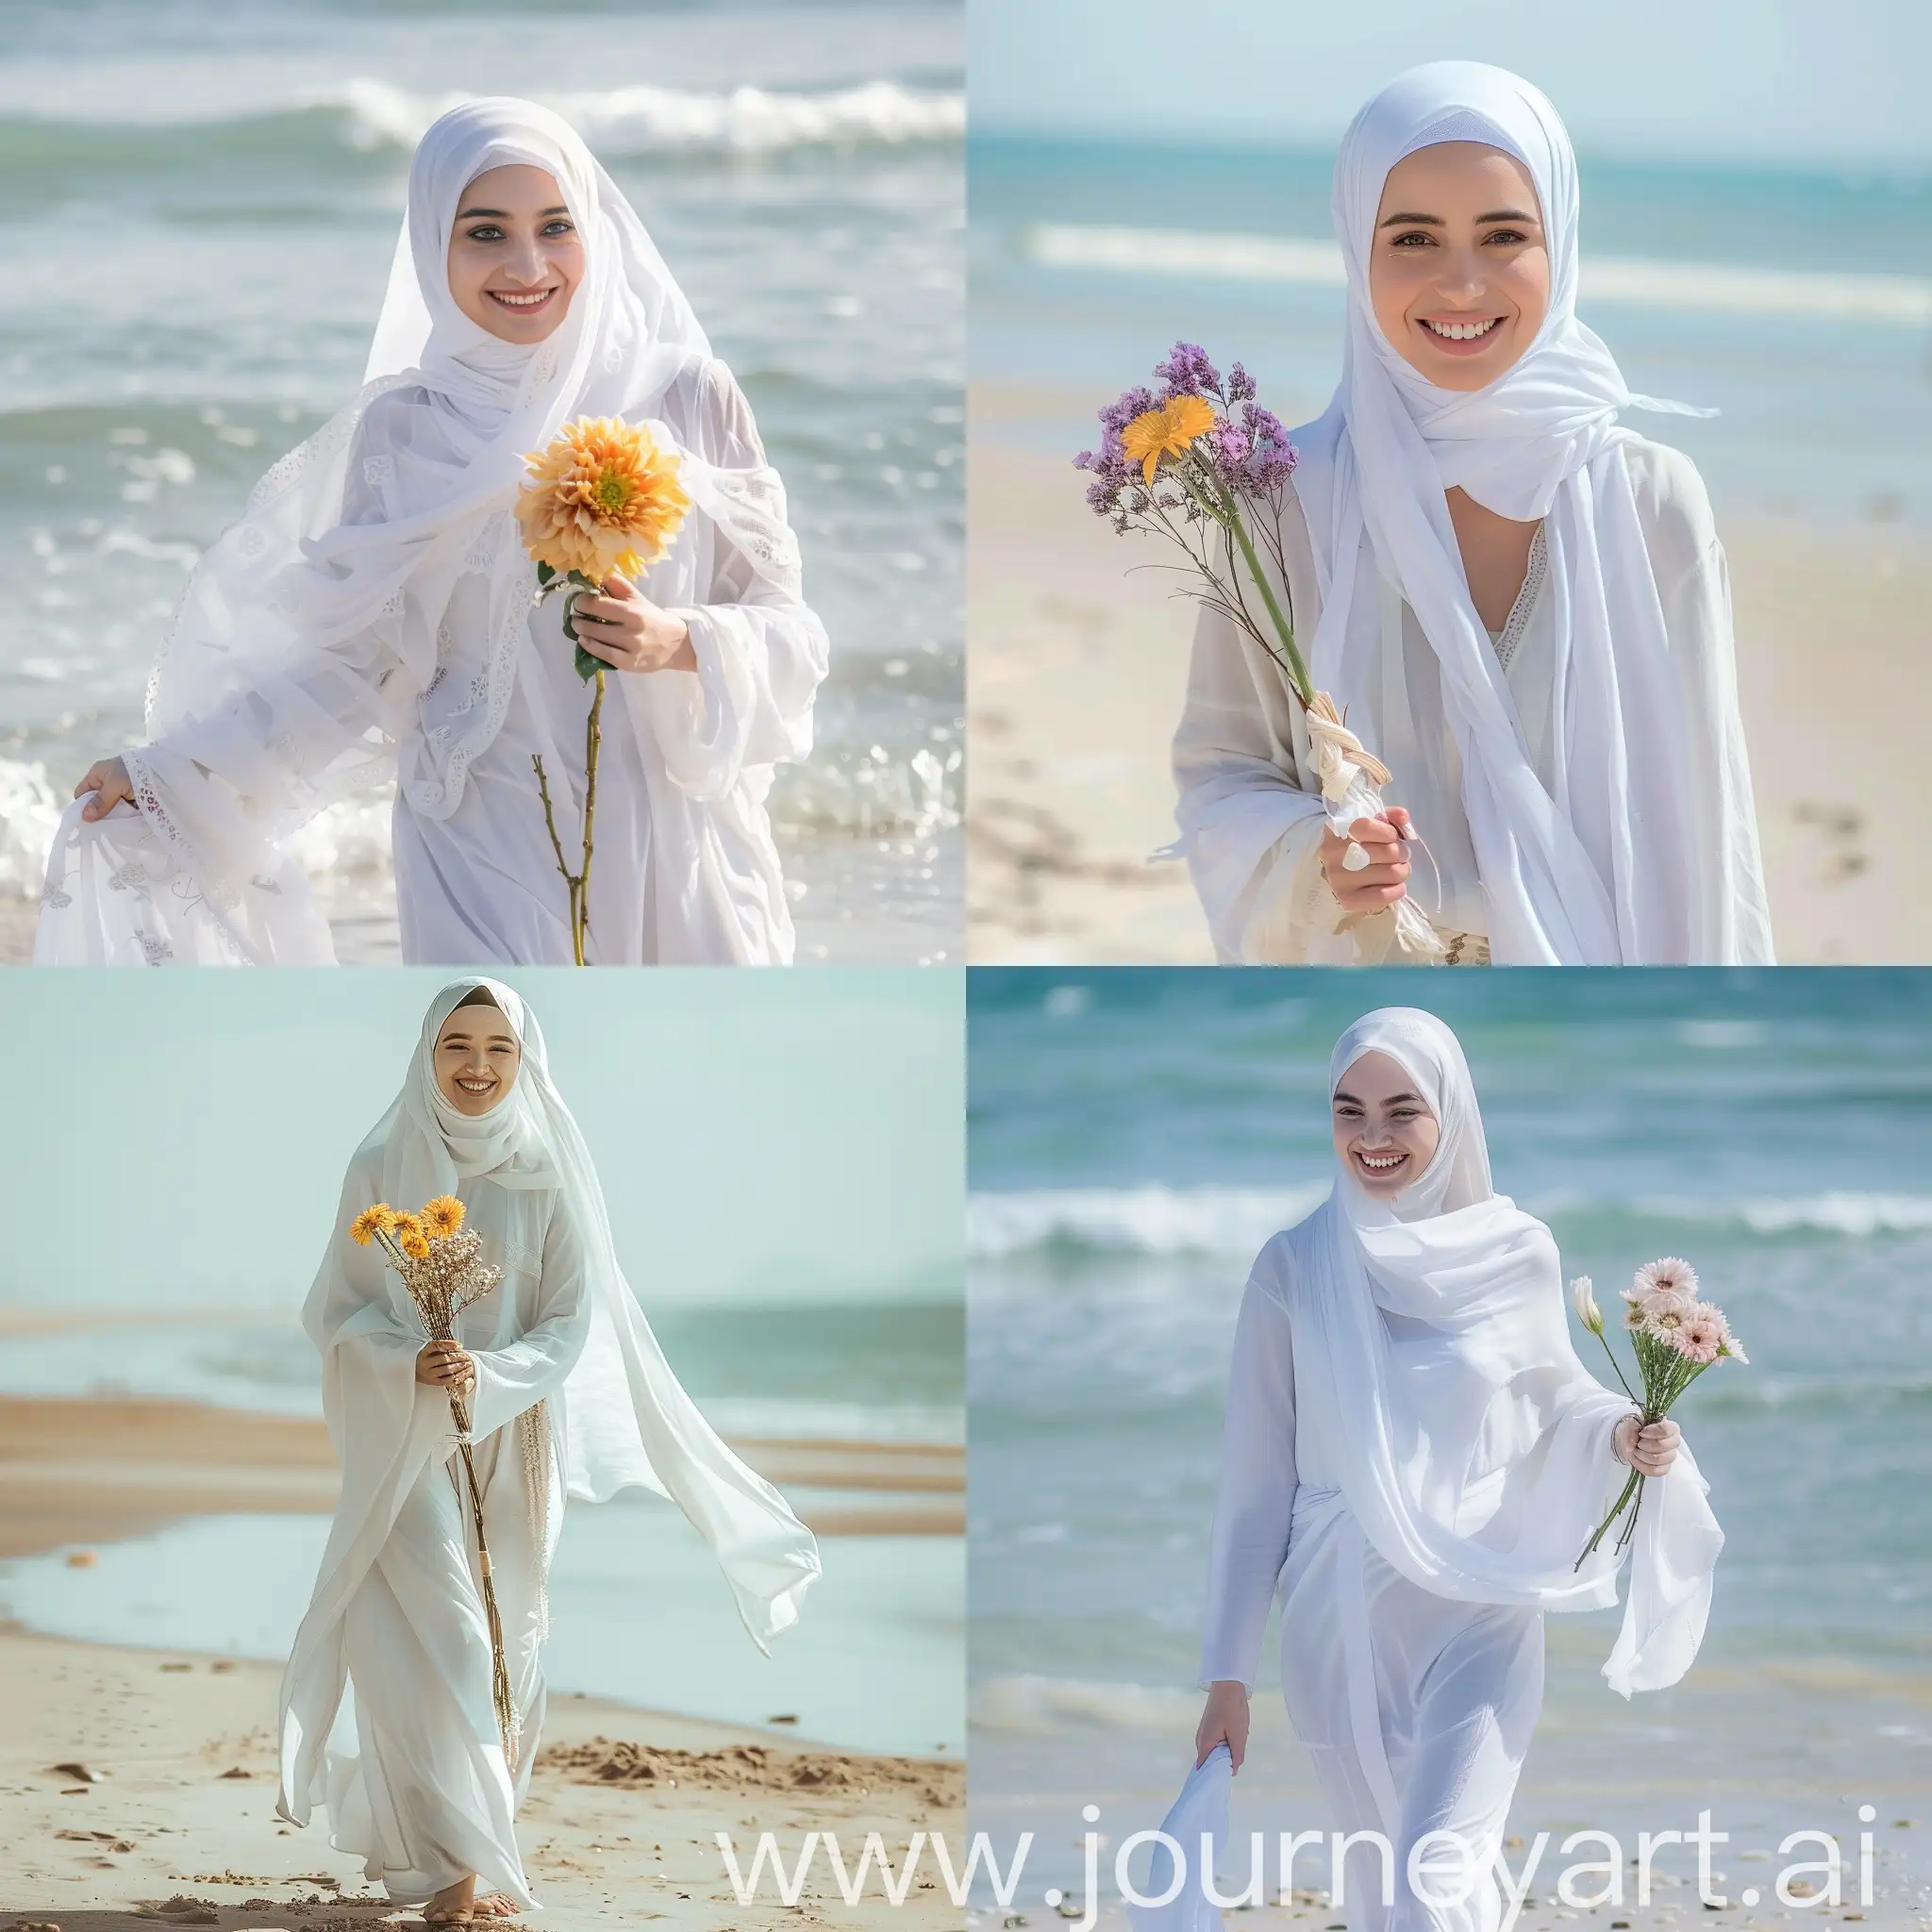 Muslim-Woman-in-White-Serene-Beach-Stroll-with-Flowers